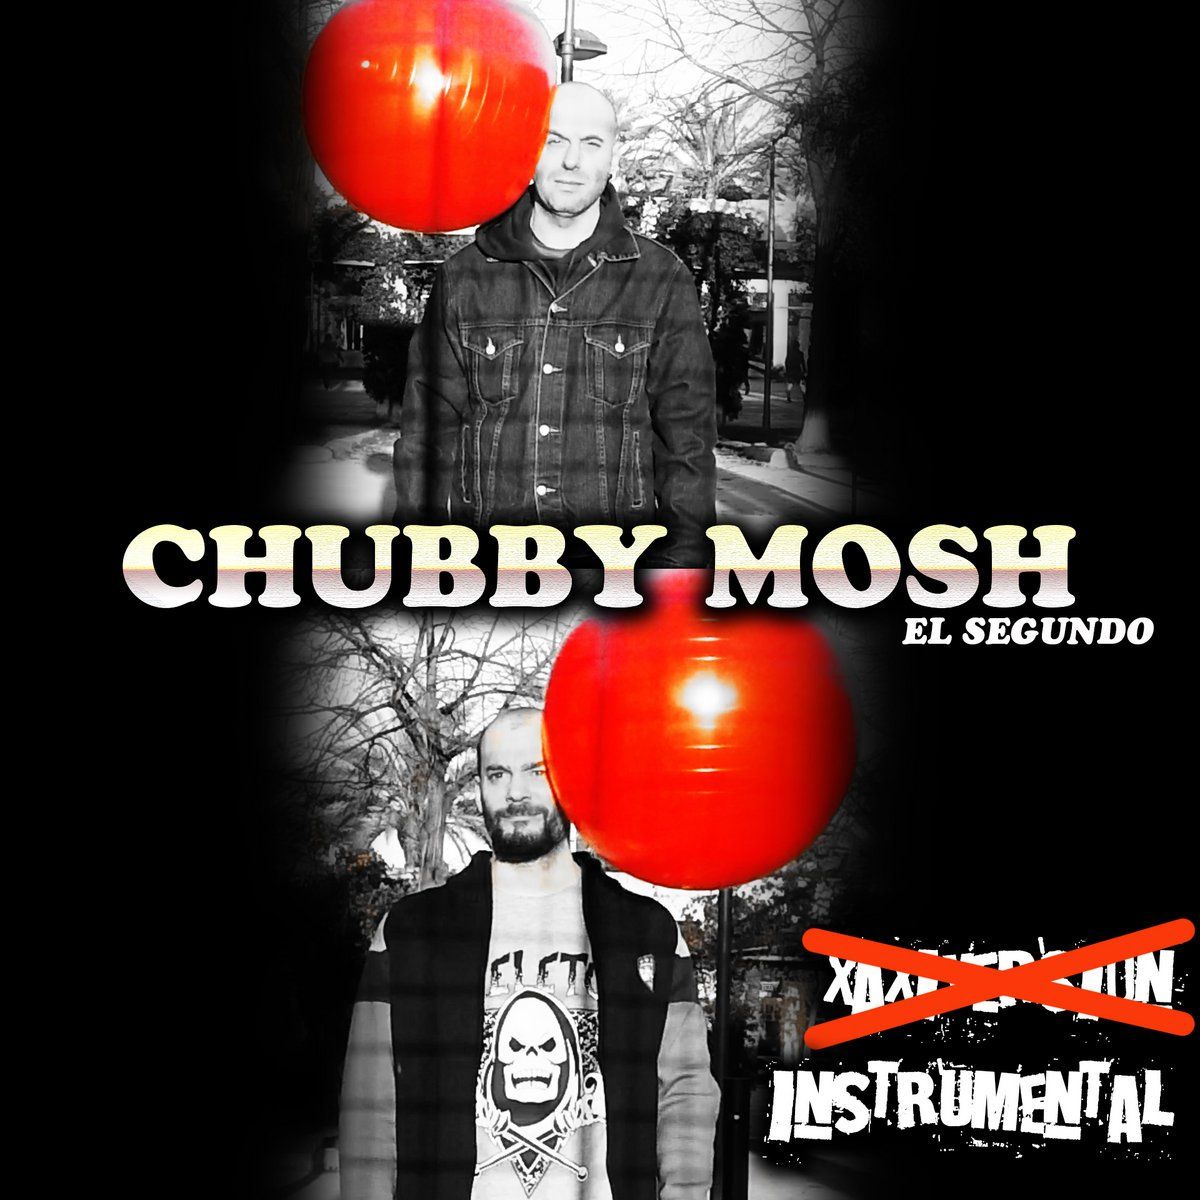 Chubby streaming free CHUBBY MOSH HOMONIMO (Voces)